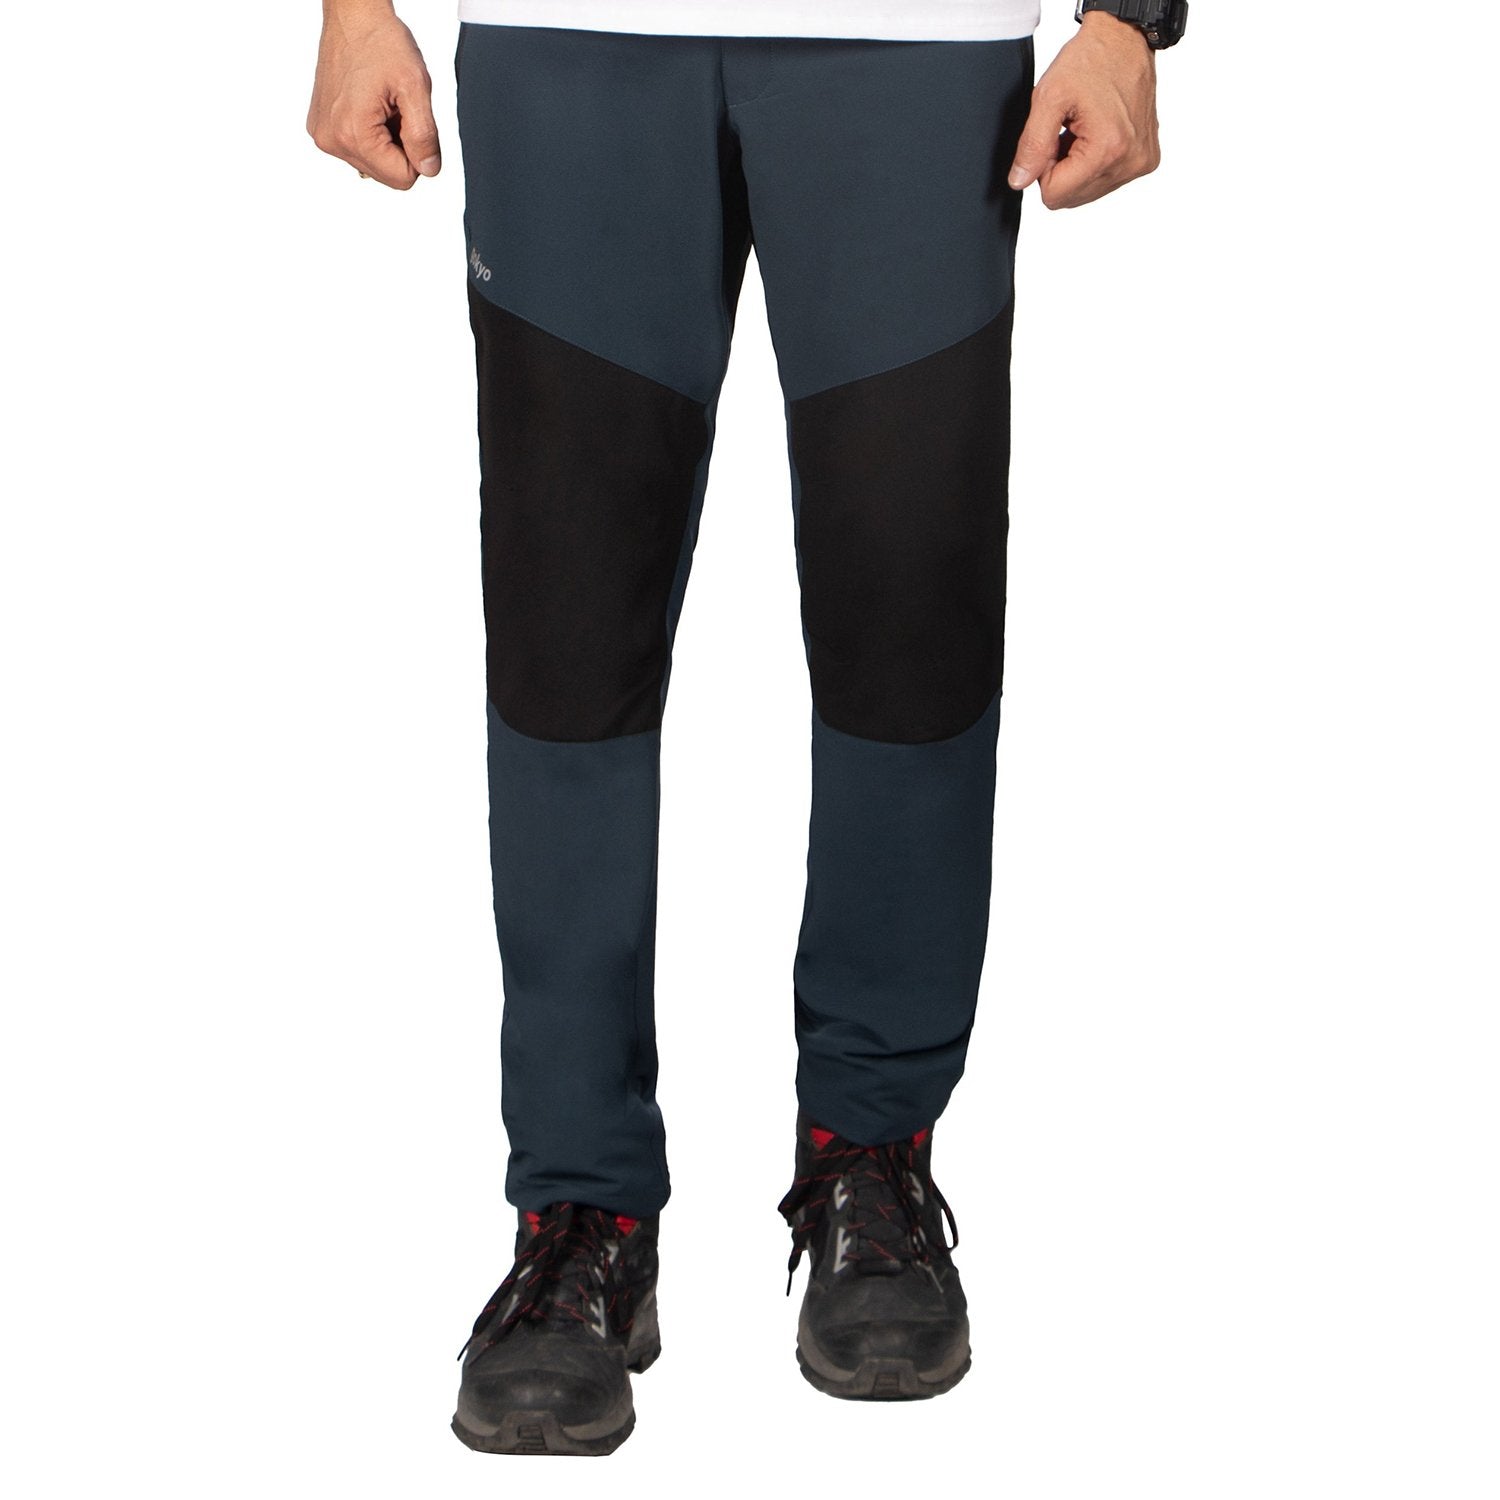 Buy Gokyo Manali All Weather Trekking Pants Airforce Blue | Trekking & Hiking Pants at Gokyo Outdoor Clothing & Gear